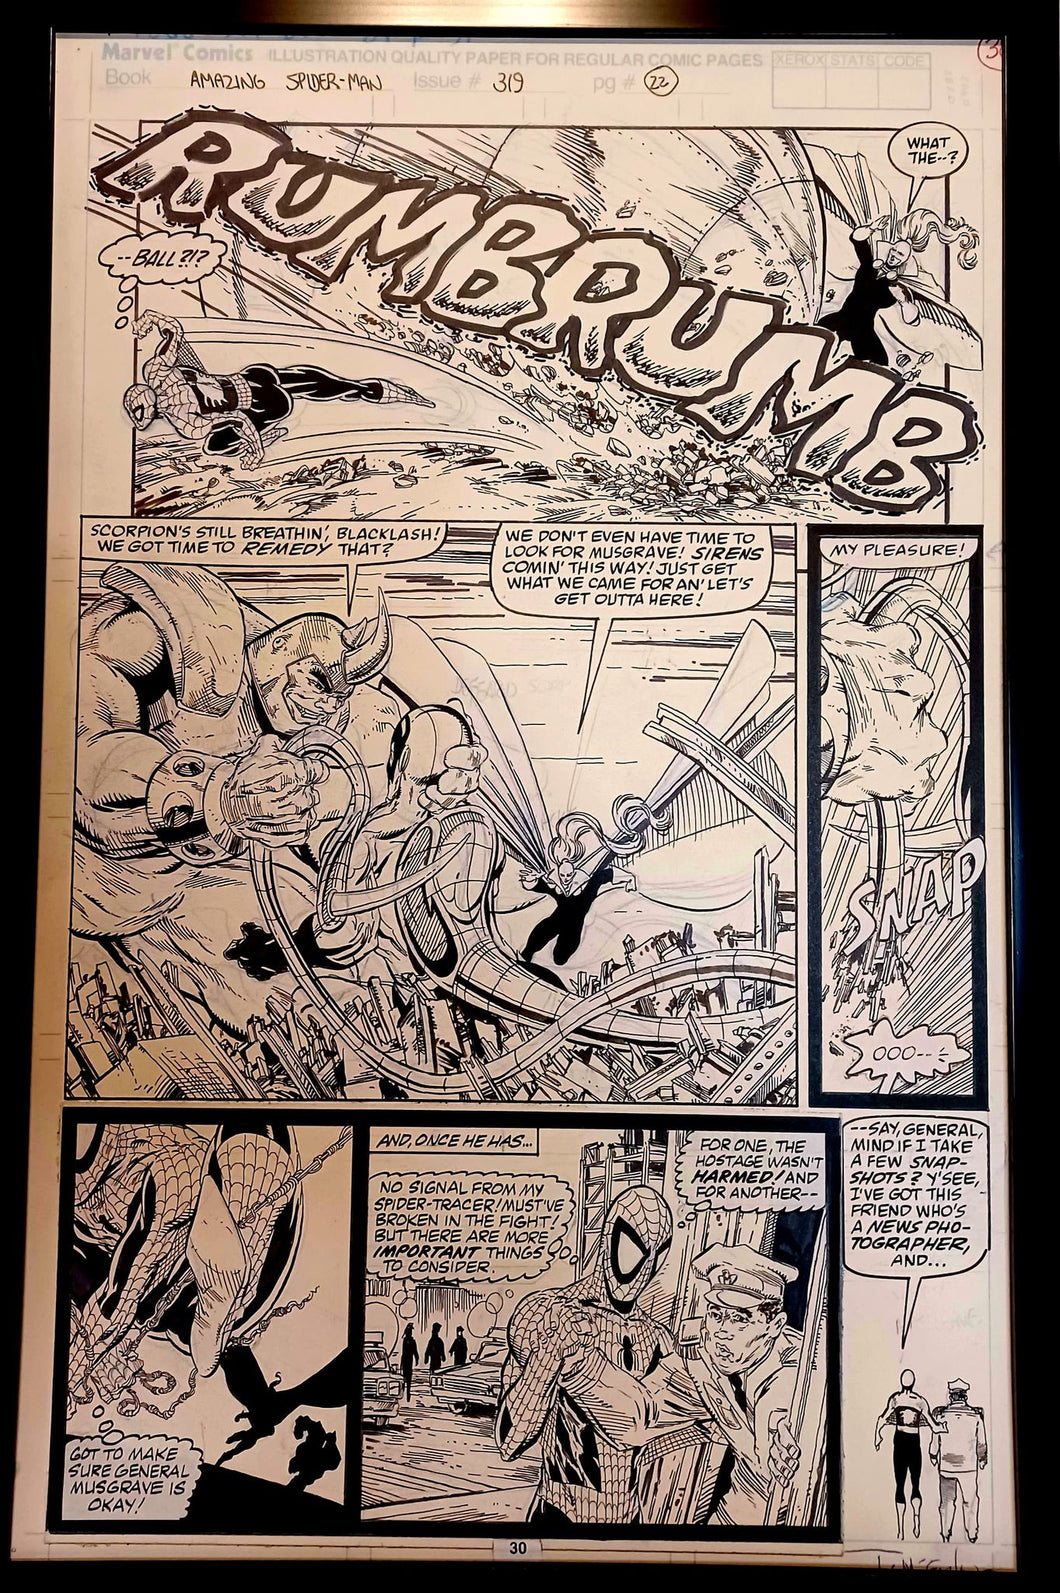 Amazing Spider-Man #319 pg. 22 by Todd McFarlane 11x17 FRAMED Original Art Print Comic Poster